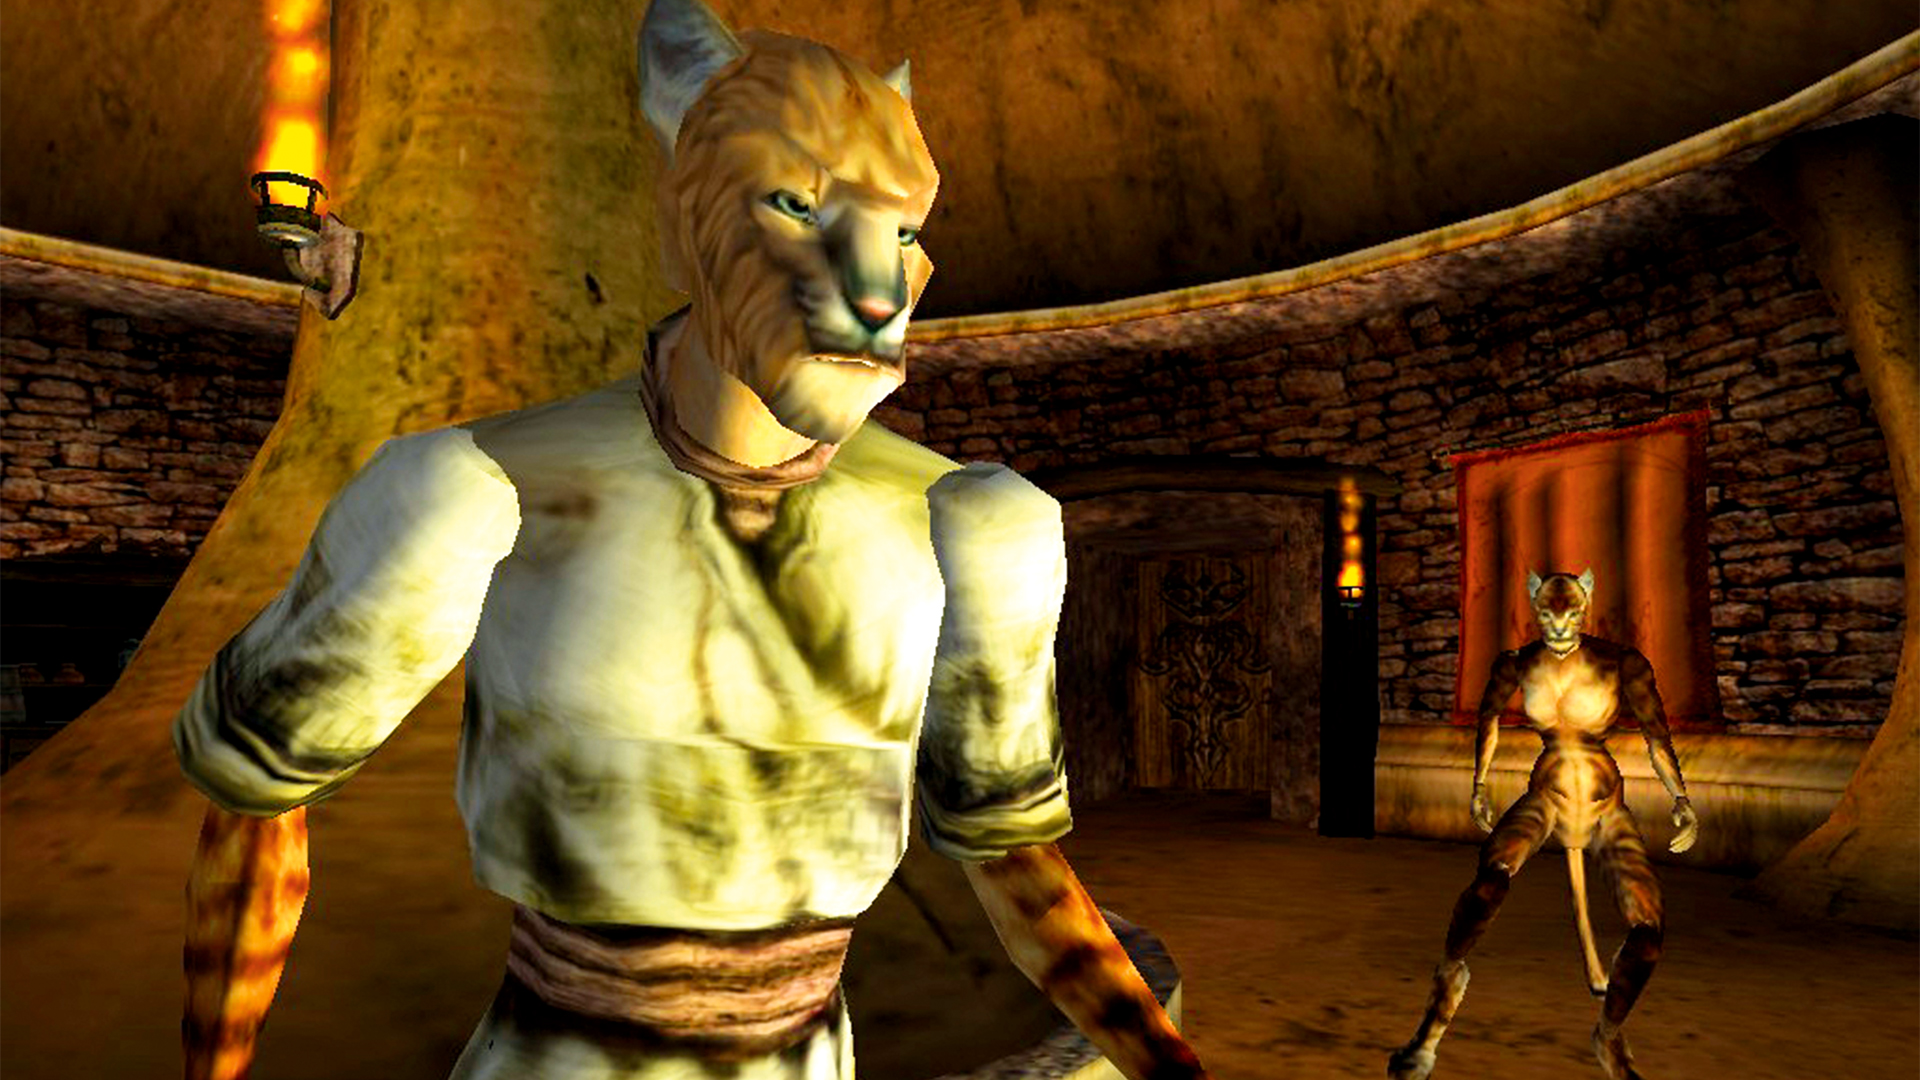 The Elder Scrolls Online: Morrowind News - Morrowind Looks to Breath New  Life Into The Elder Scrolls Online - First Gameplay Trailer